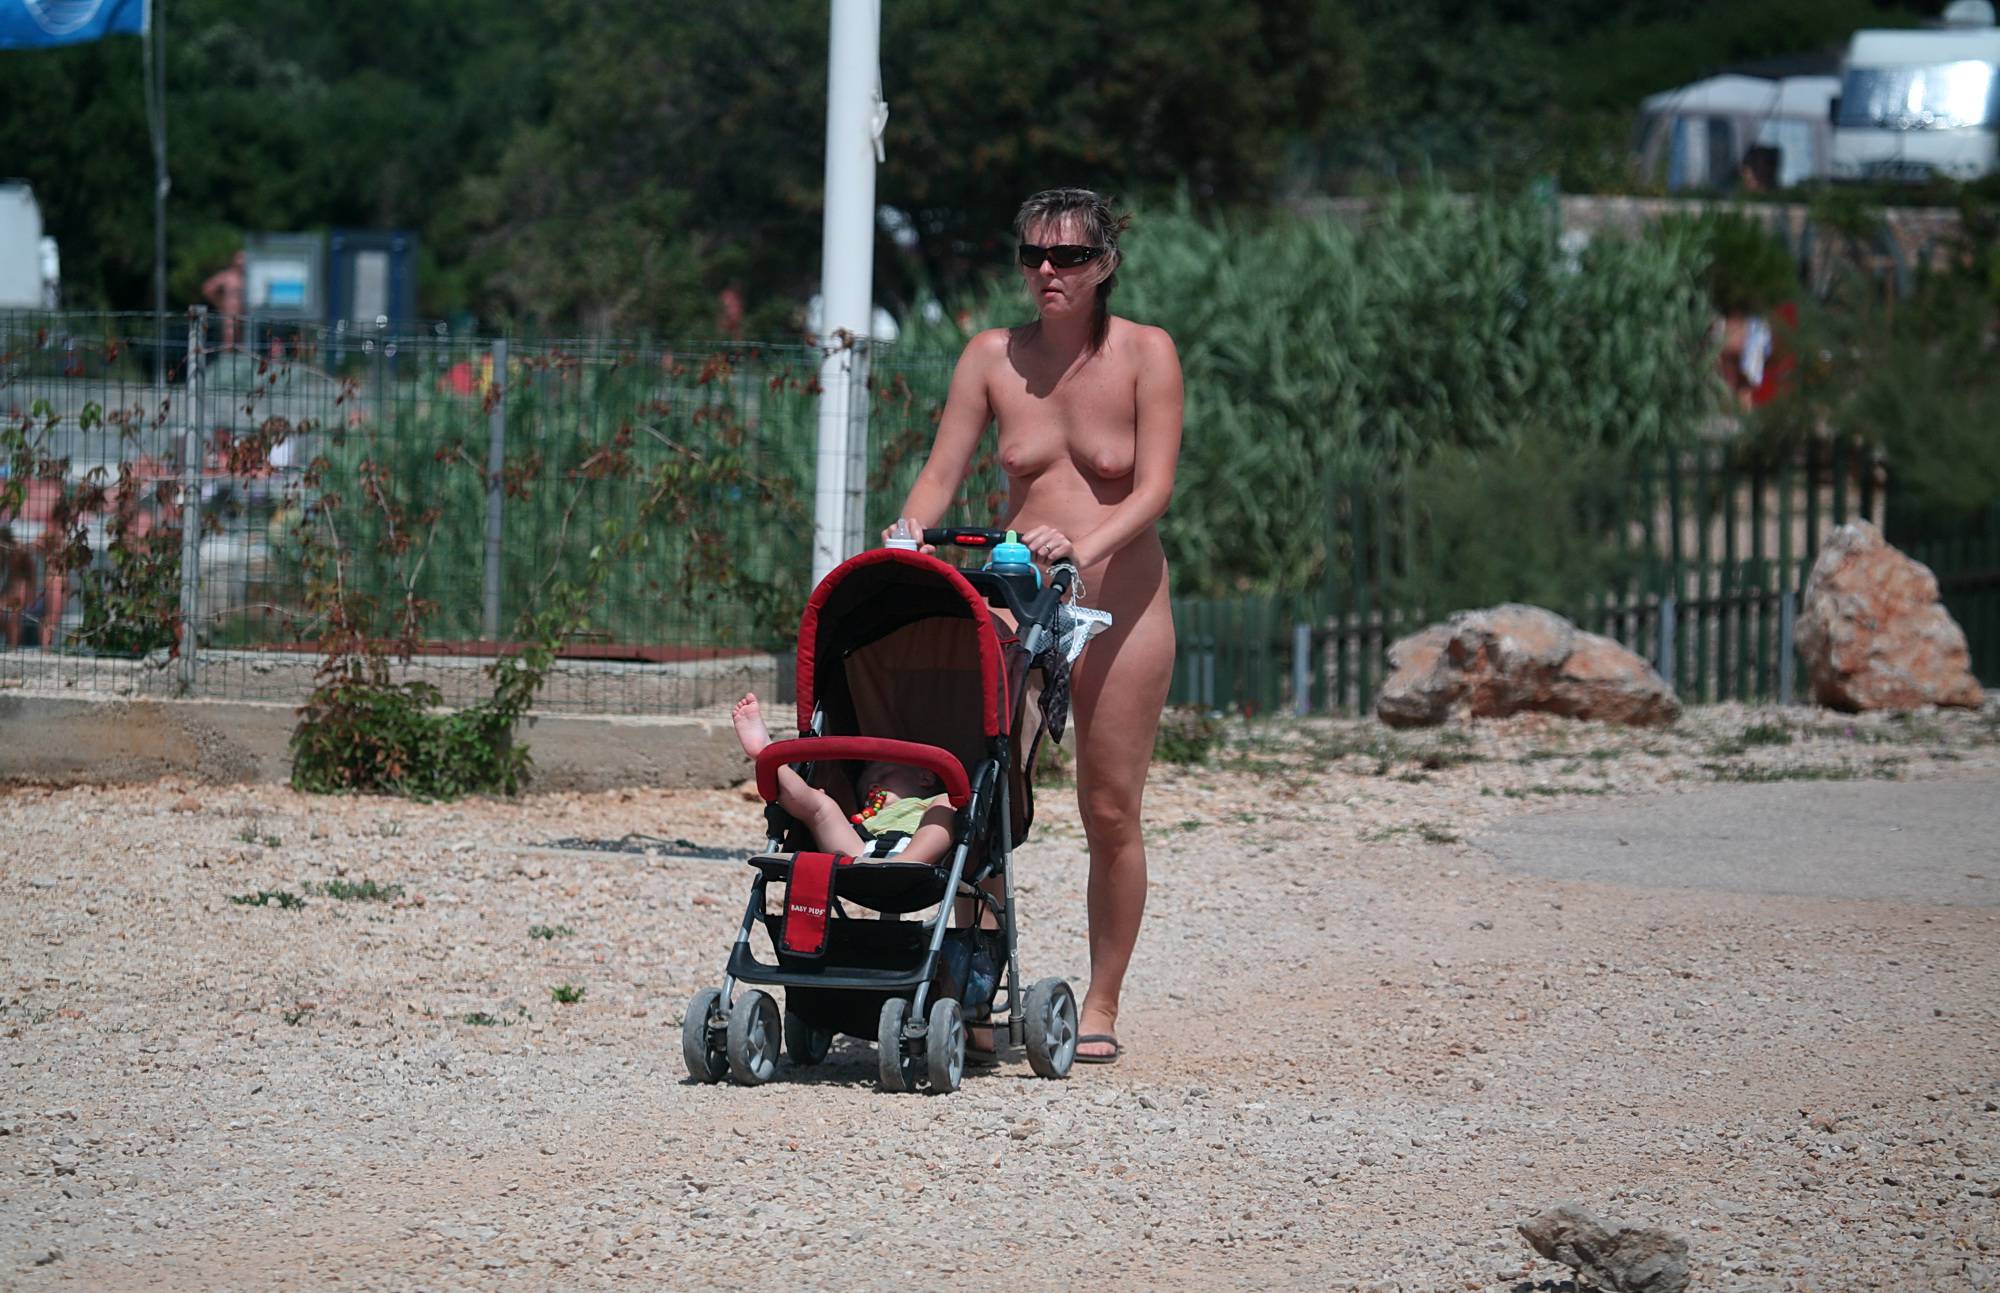 Nudist Photos Mother and Toddler Walks - 1